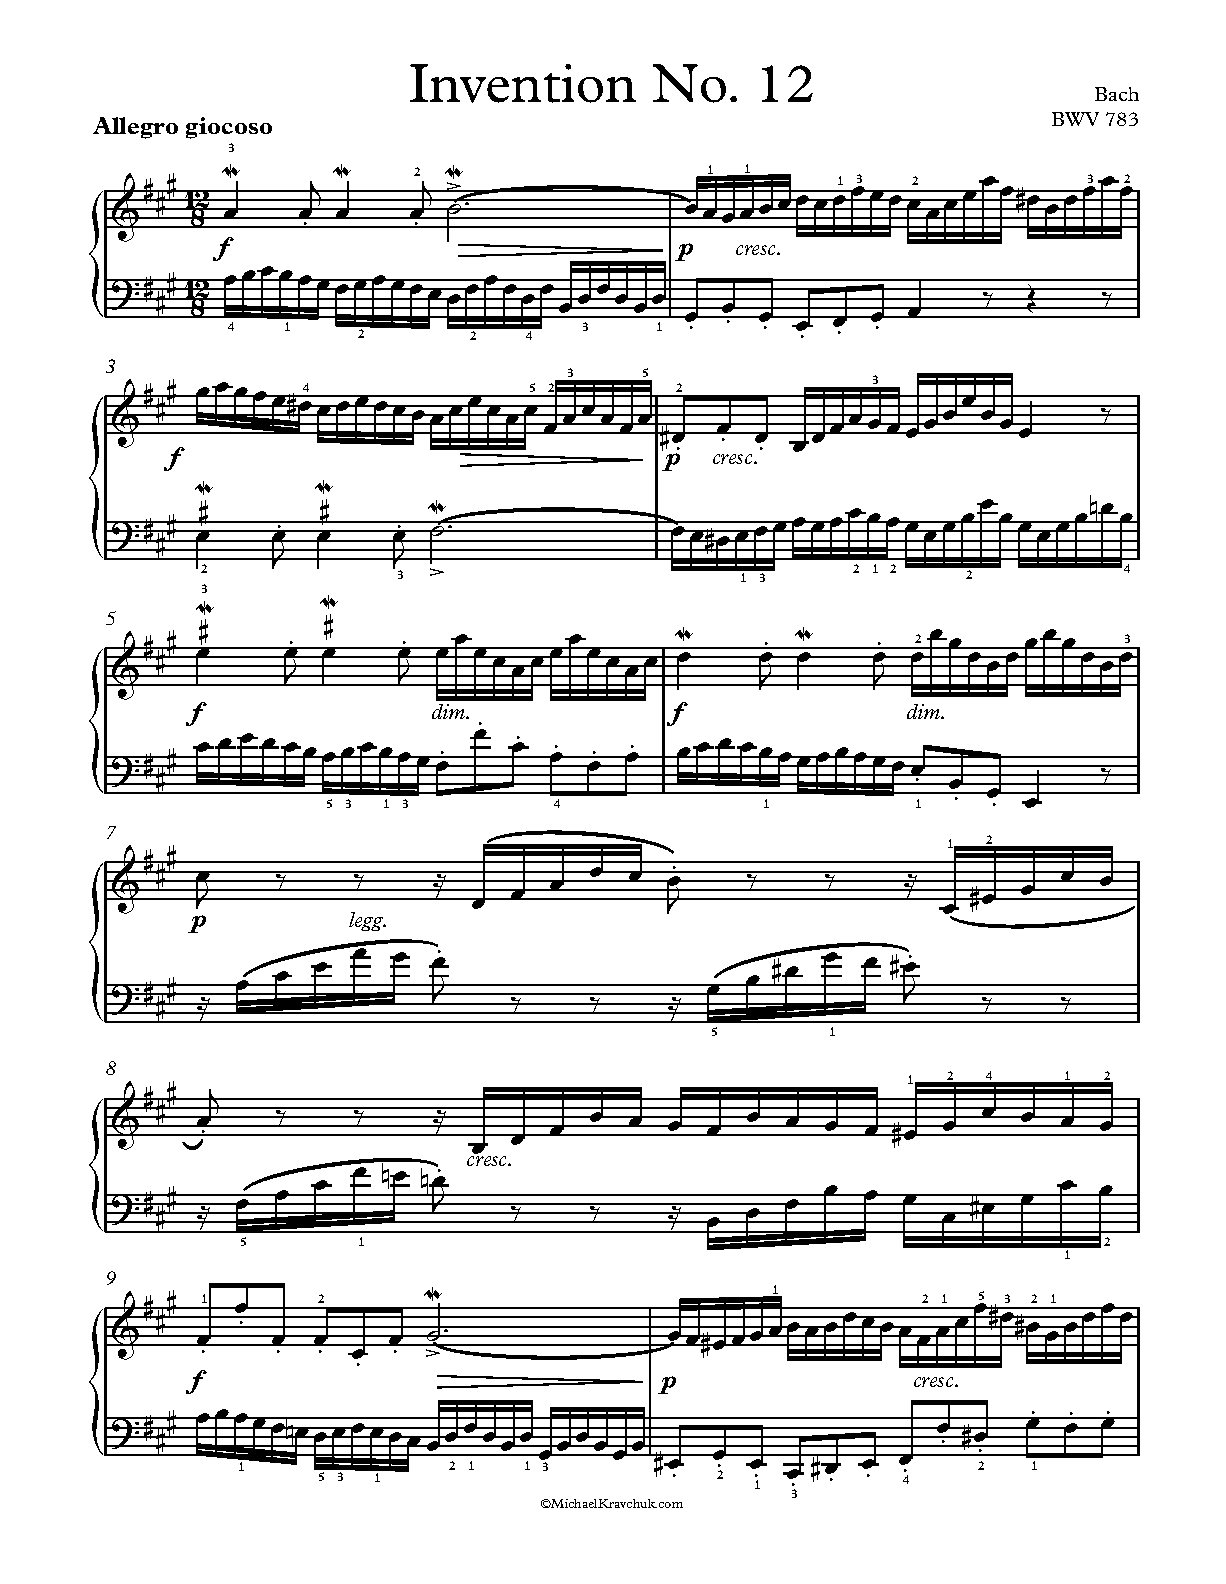 Free Piano Sheet Music – Invention No. 12 BWV 783 - Bach